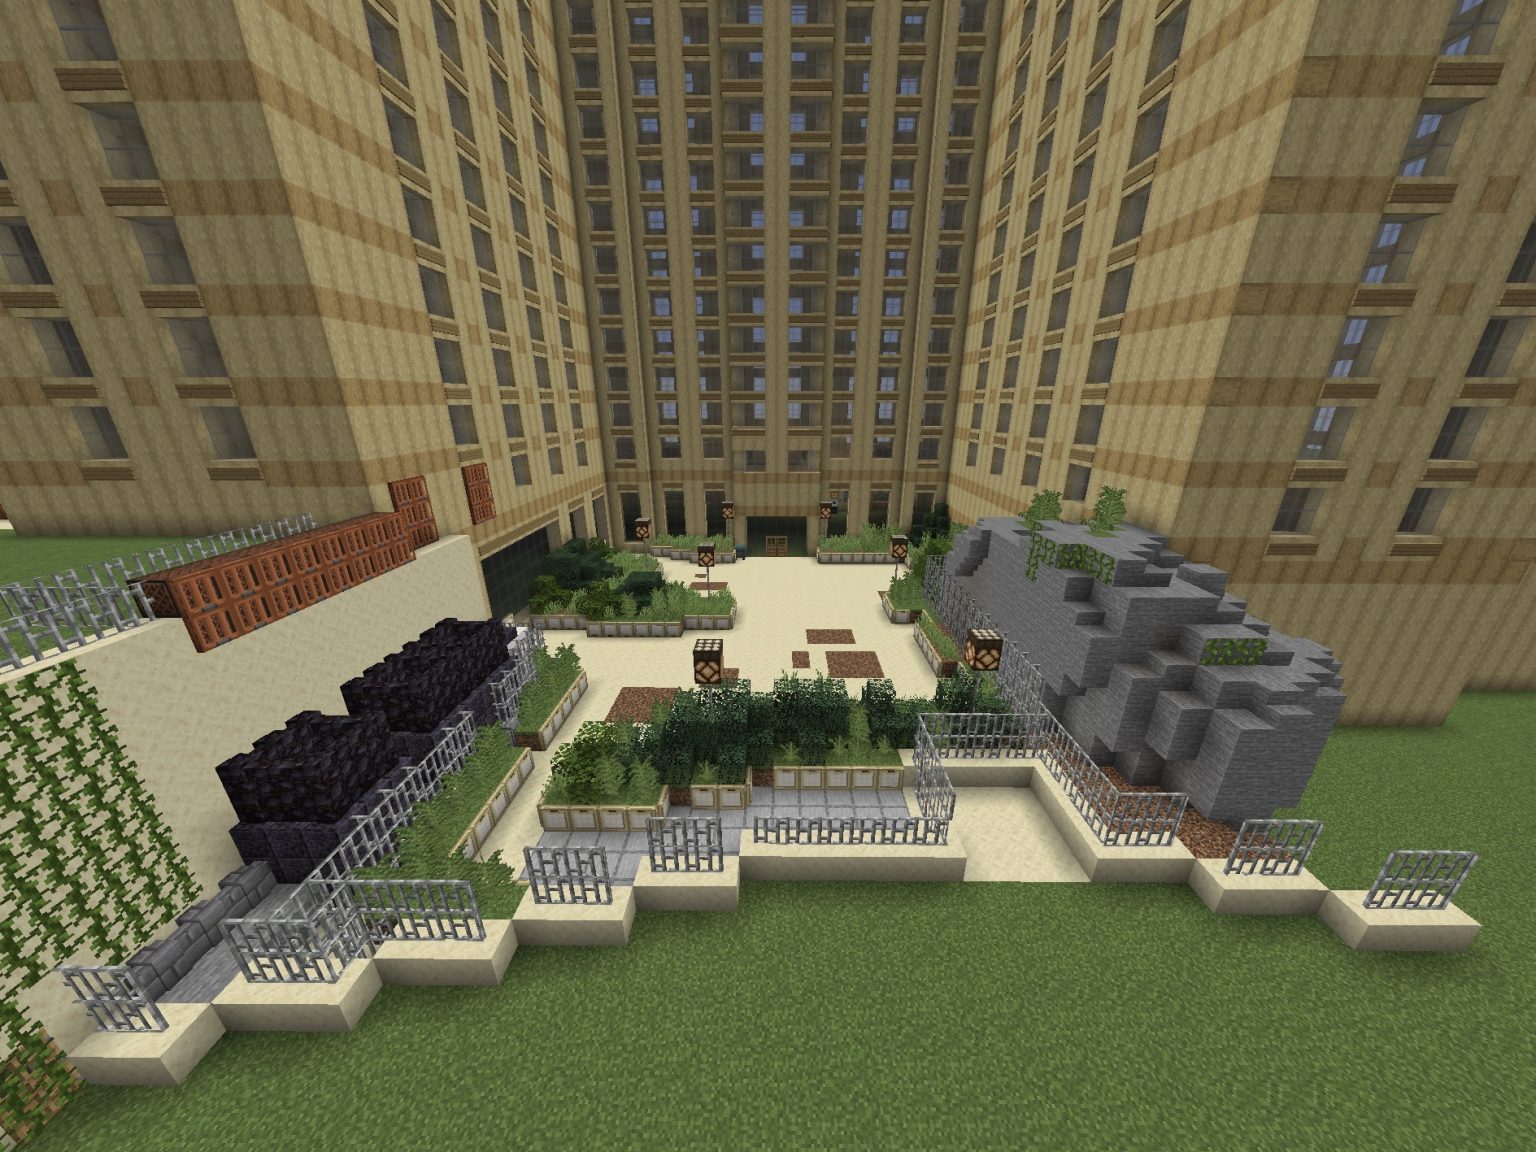 Students Begin Building a ‘Virtual Fordham’ on Minecraft